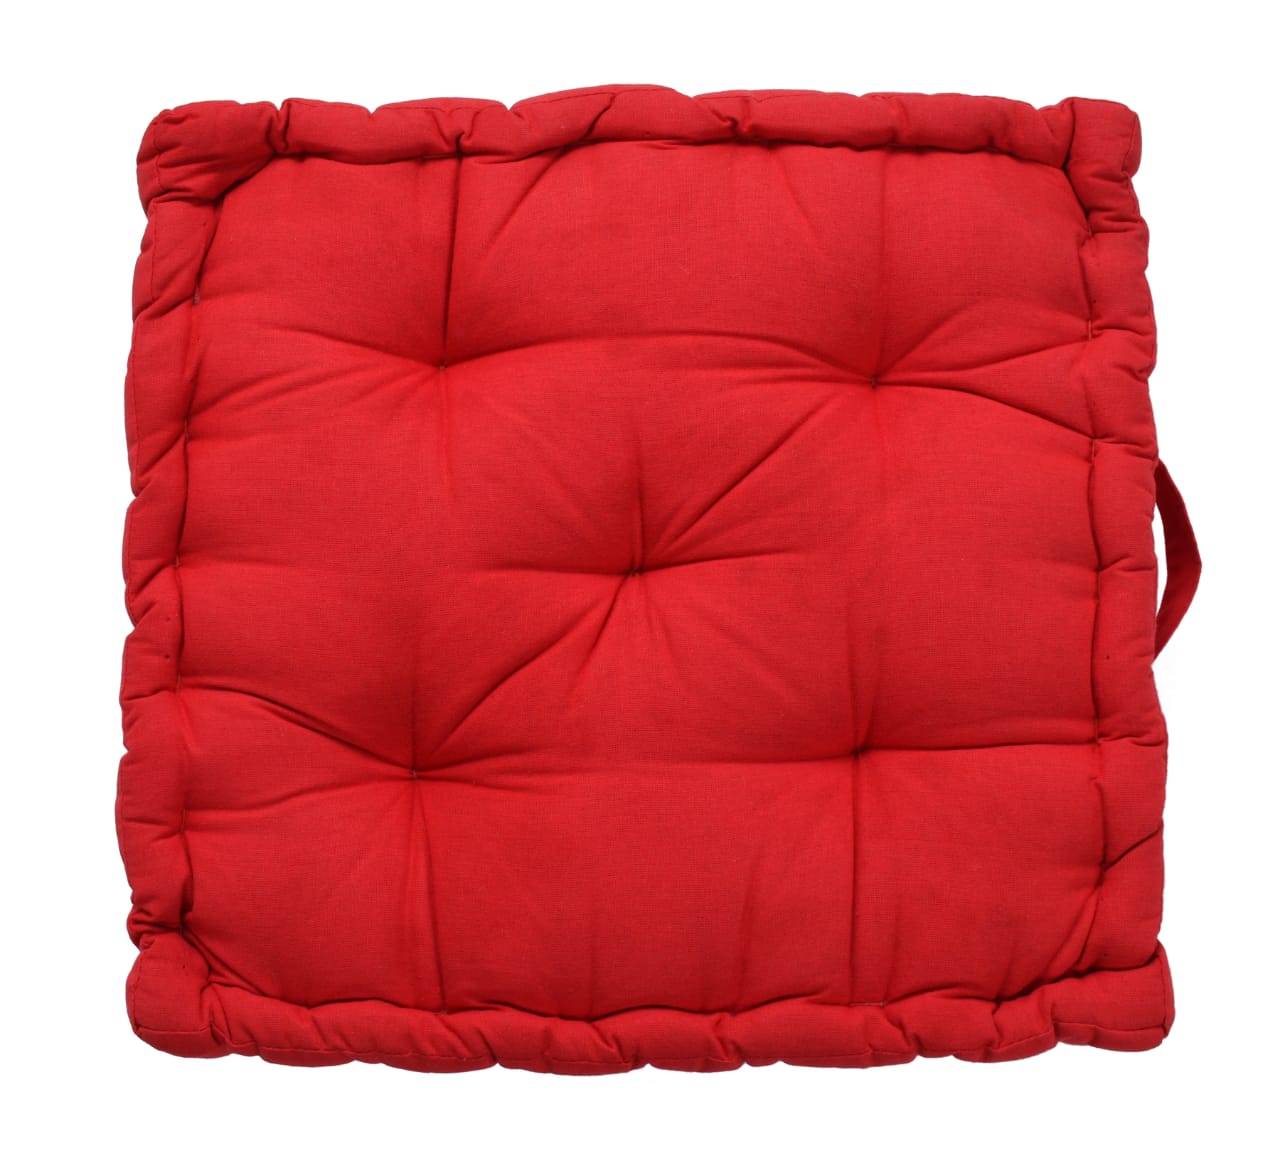 TIB Cotton Decorative Fabric Chair Pad/Back Support/Seat Cushion